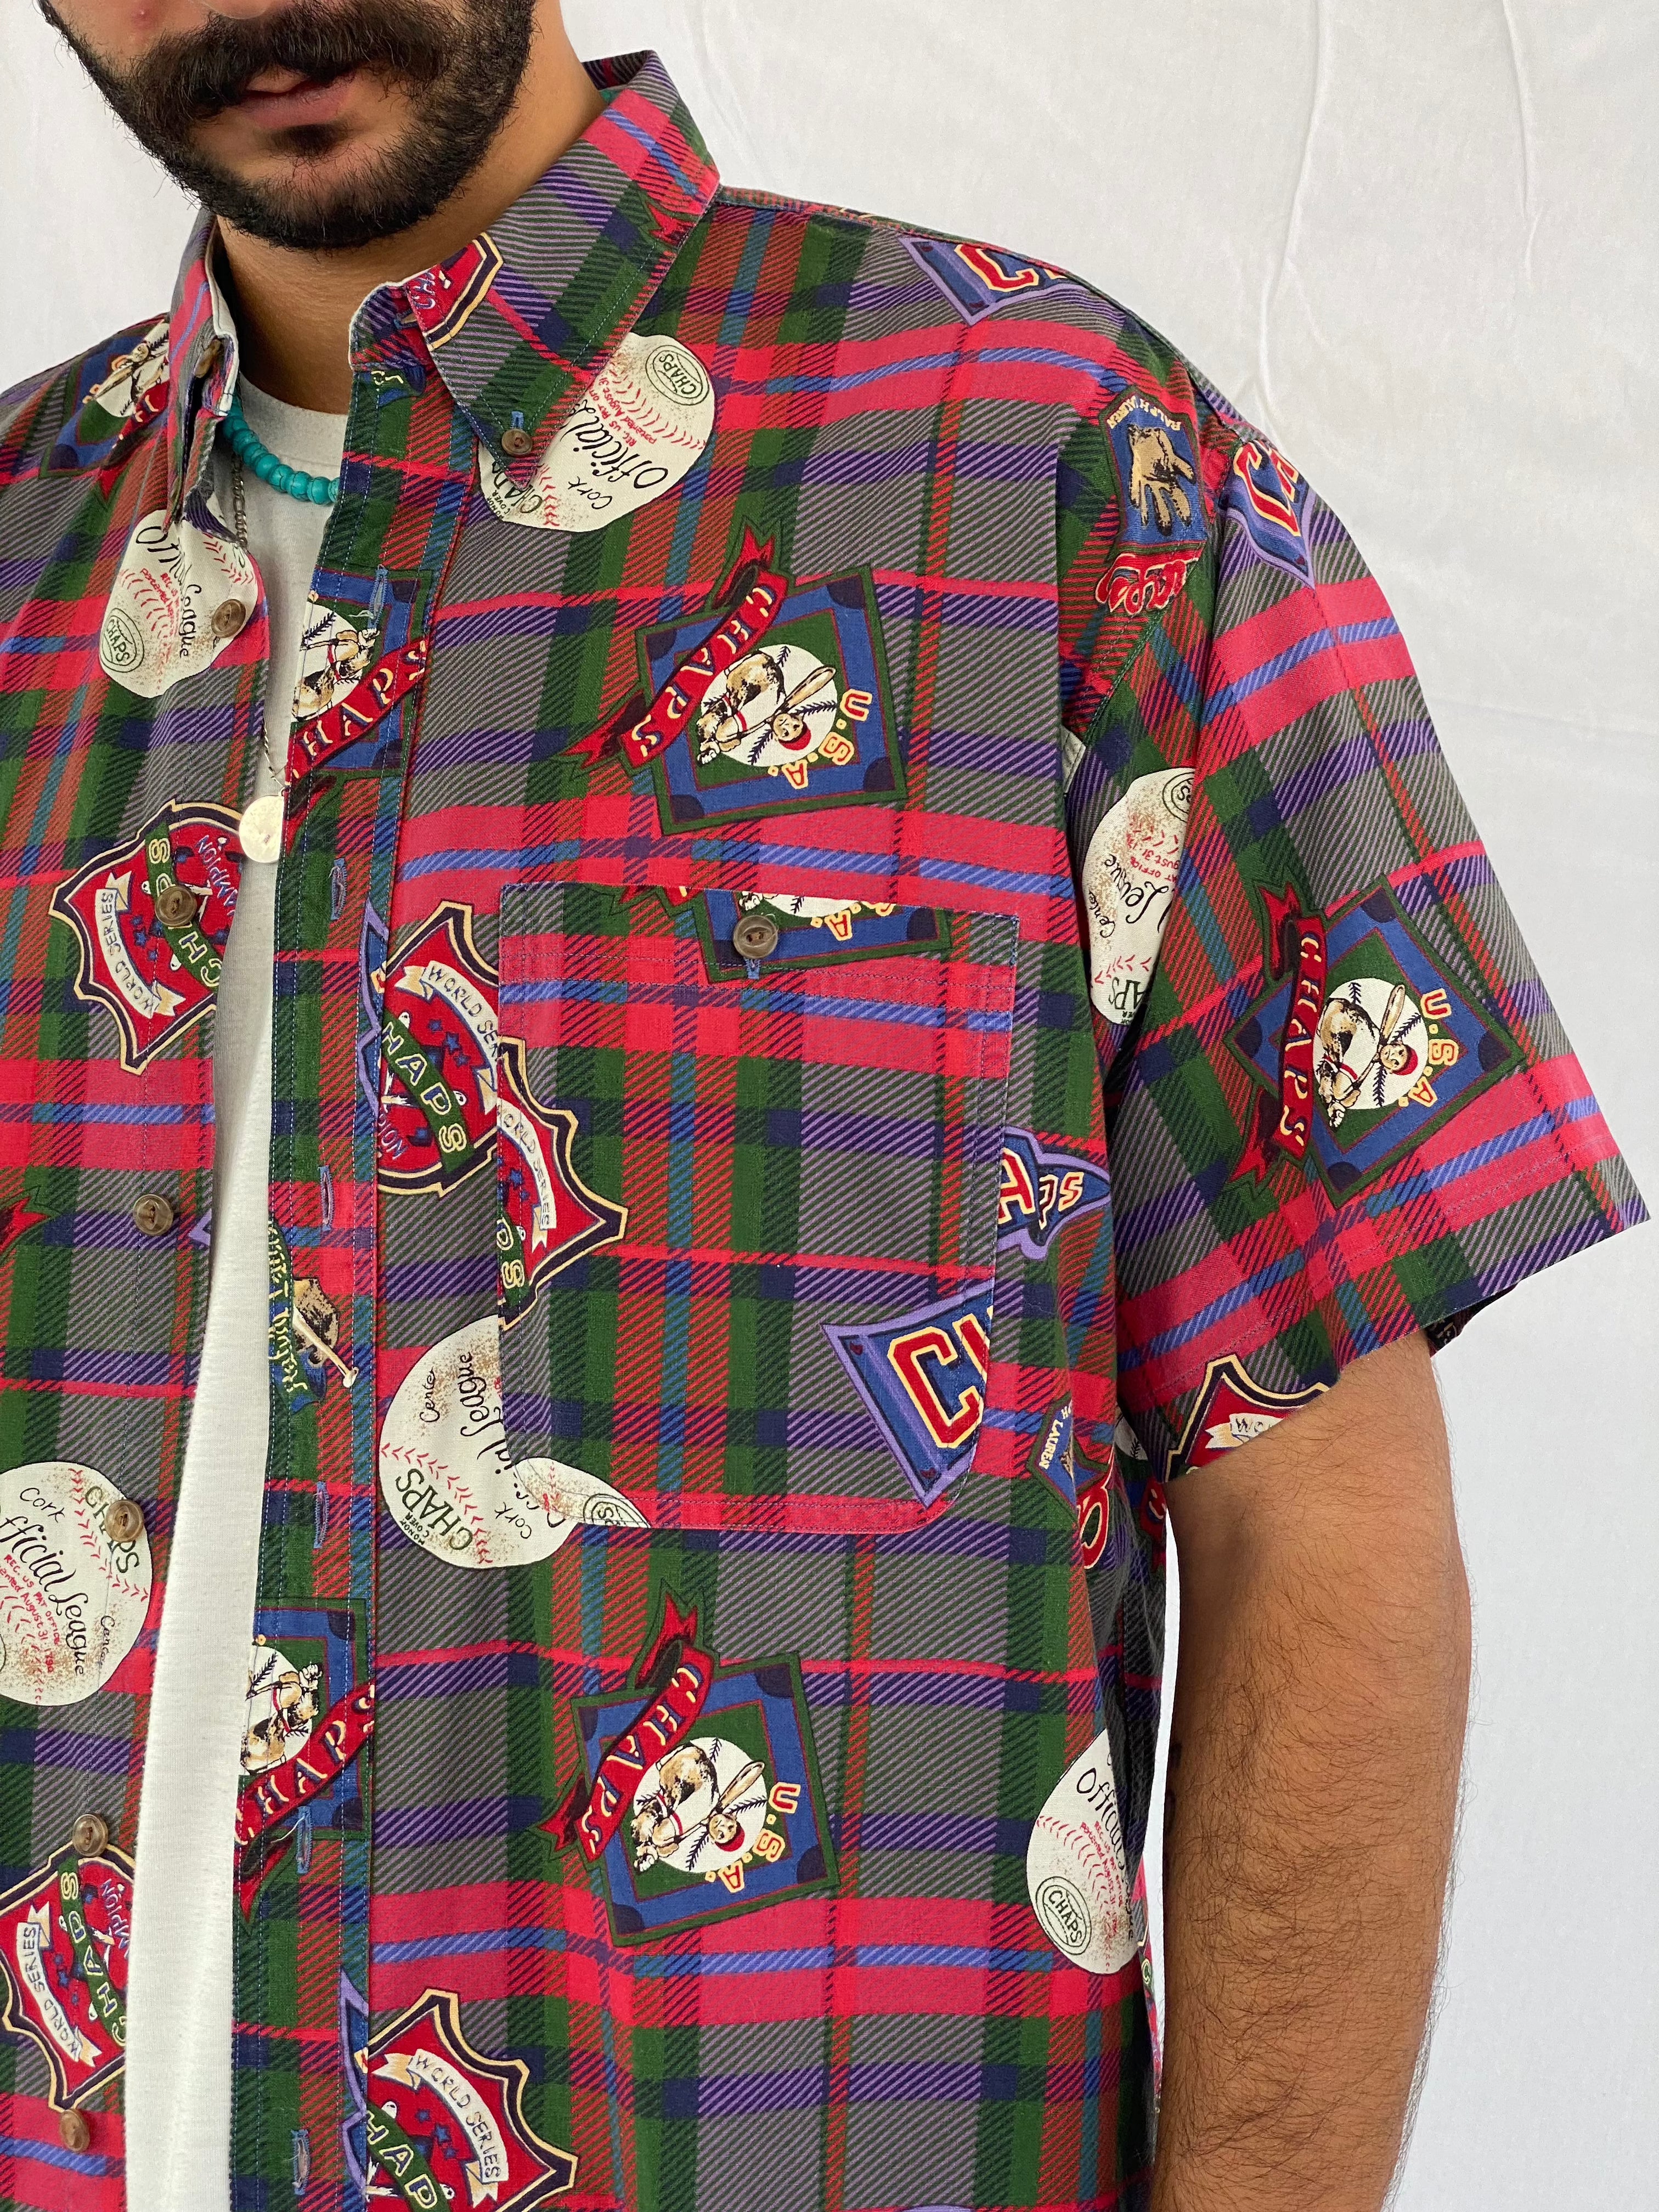 Chaps Ralph Lauren Vintage 90s T-Shirt – Agent Thrift